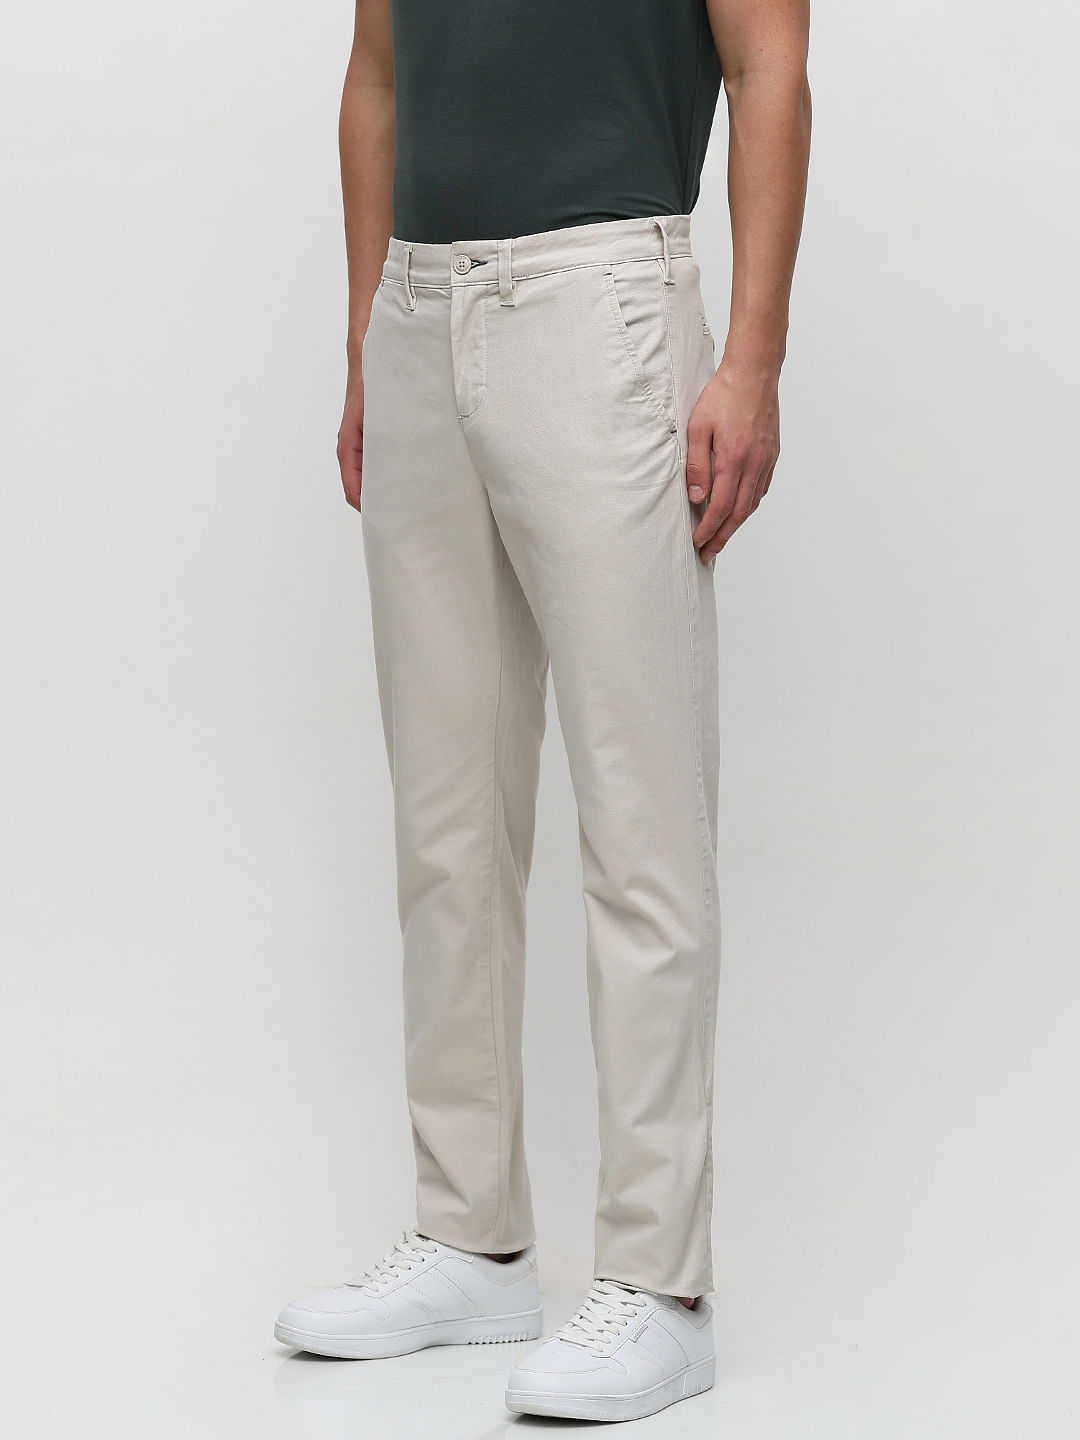 Off-cream Color Regular Fit Formal Trousers at Rs 1399.00 | Men Formal  Trouser | ID: 2850491996688